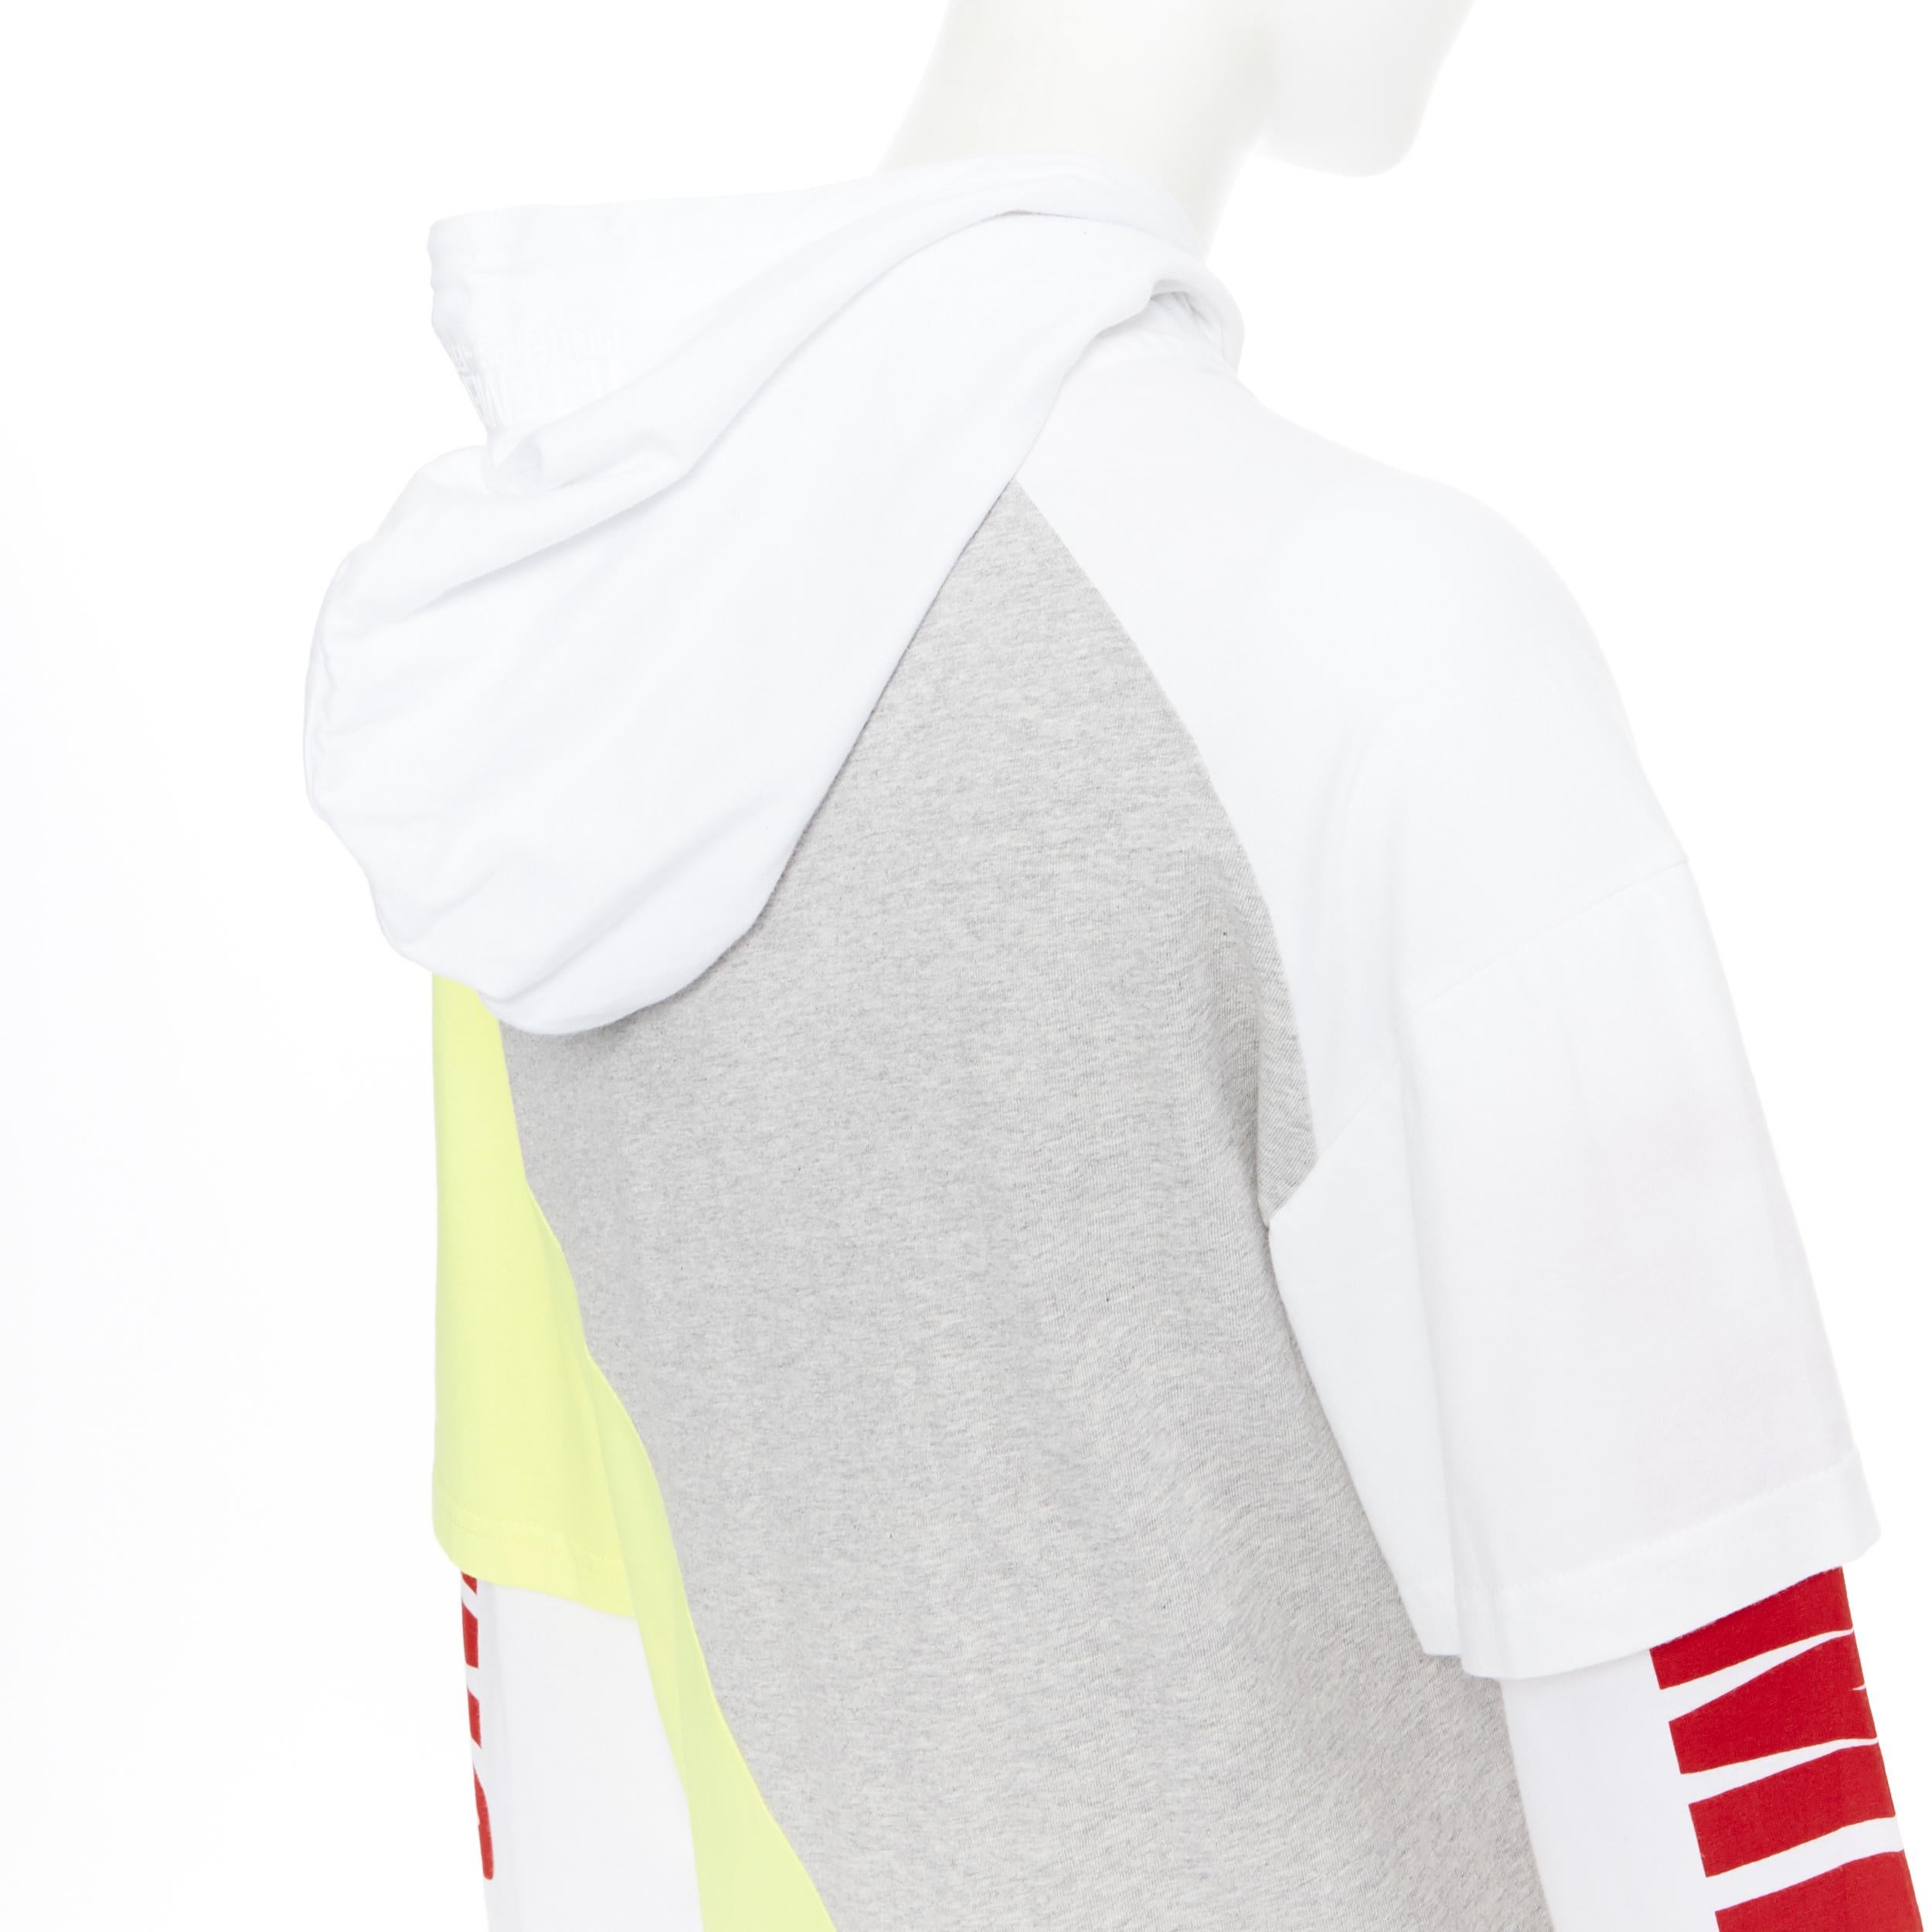 new VETEMENTS Demna Gvasalia white deconstructed band t-shirt hooded dress S 2